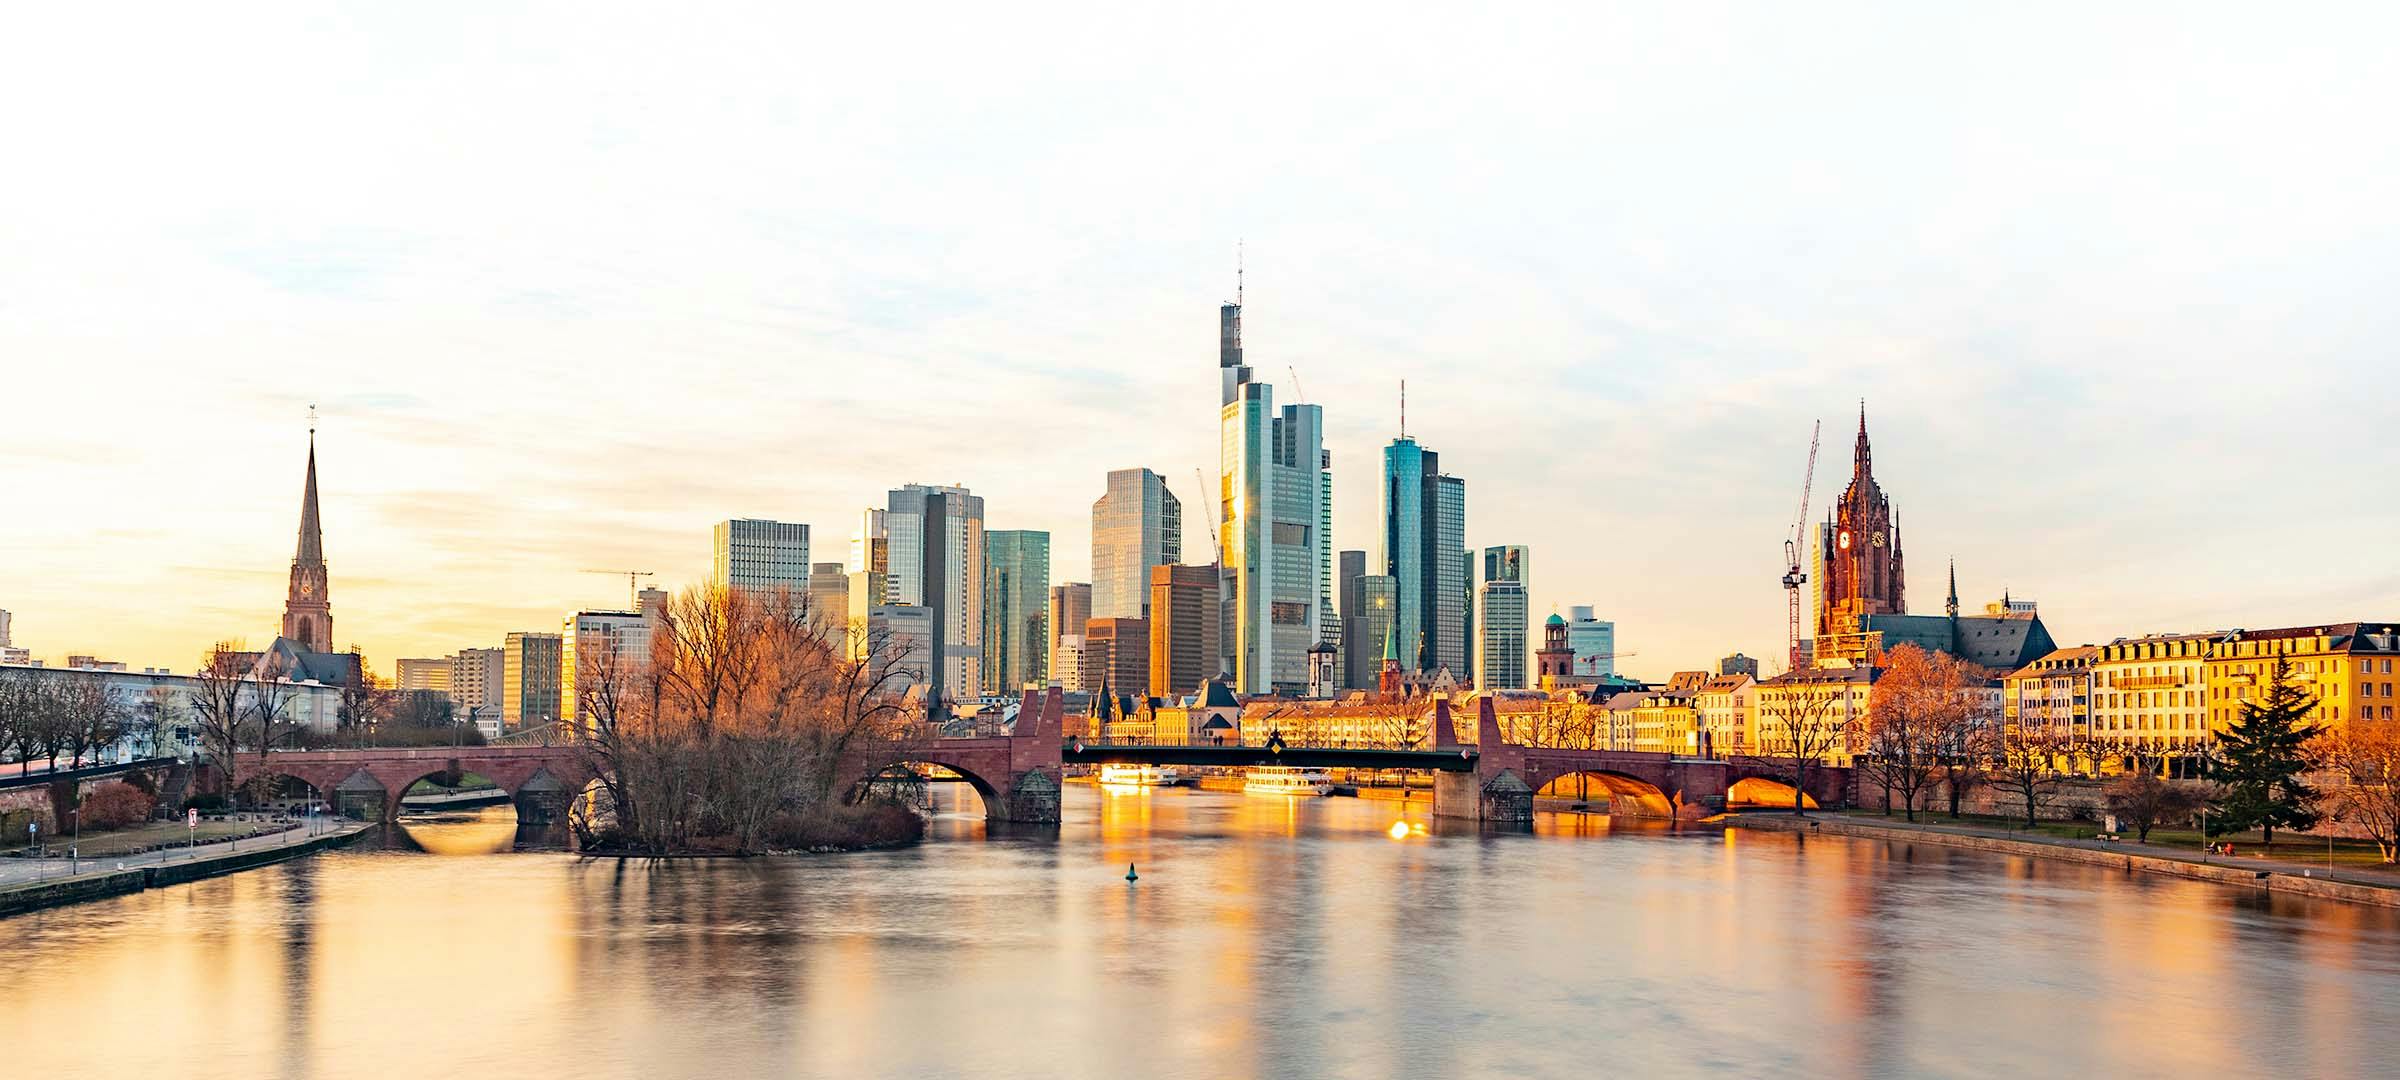 Skyline view of Frankfurt city